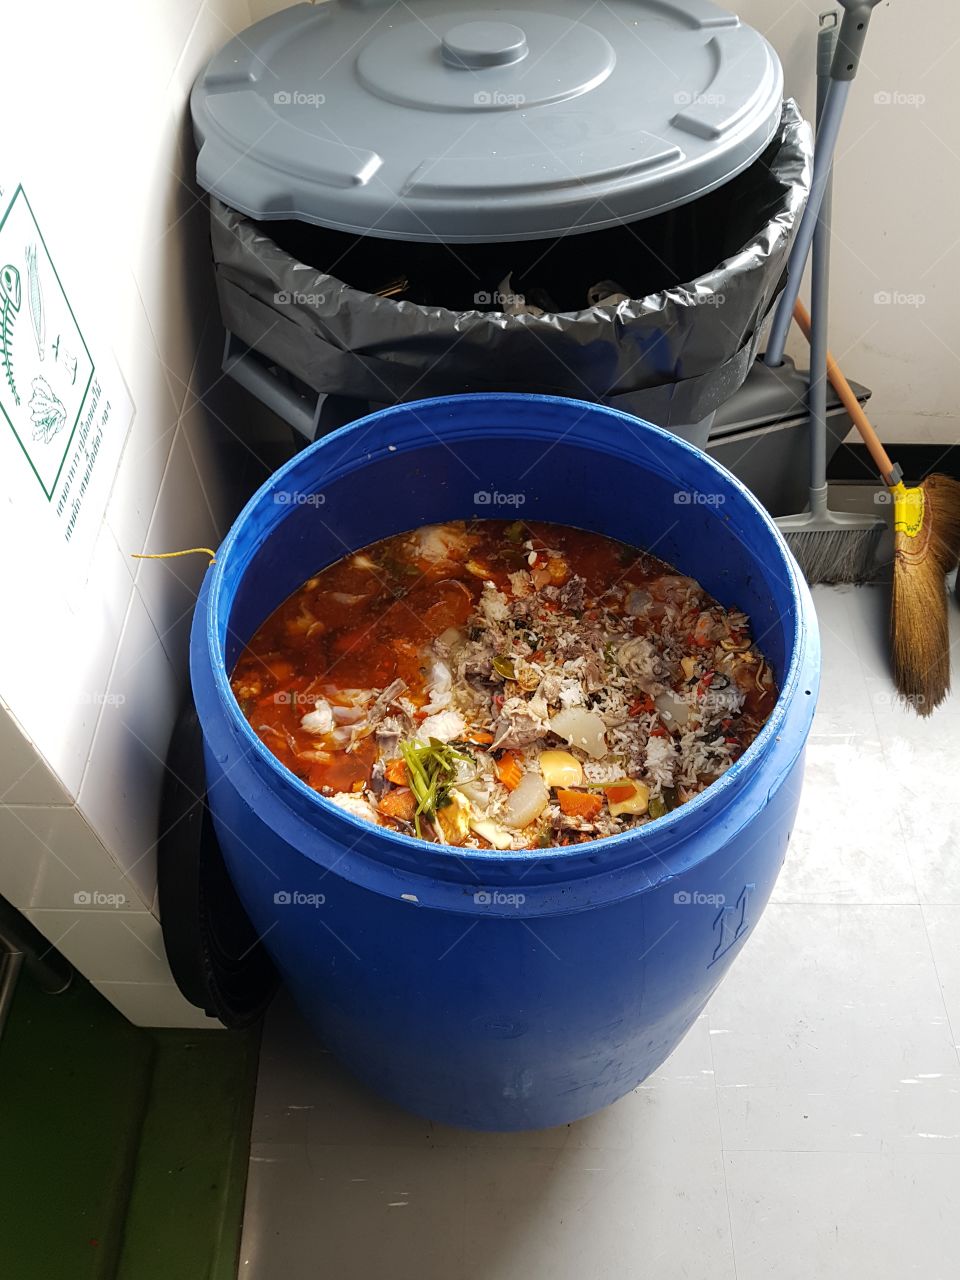 food waste thrown in the garbage